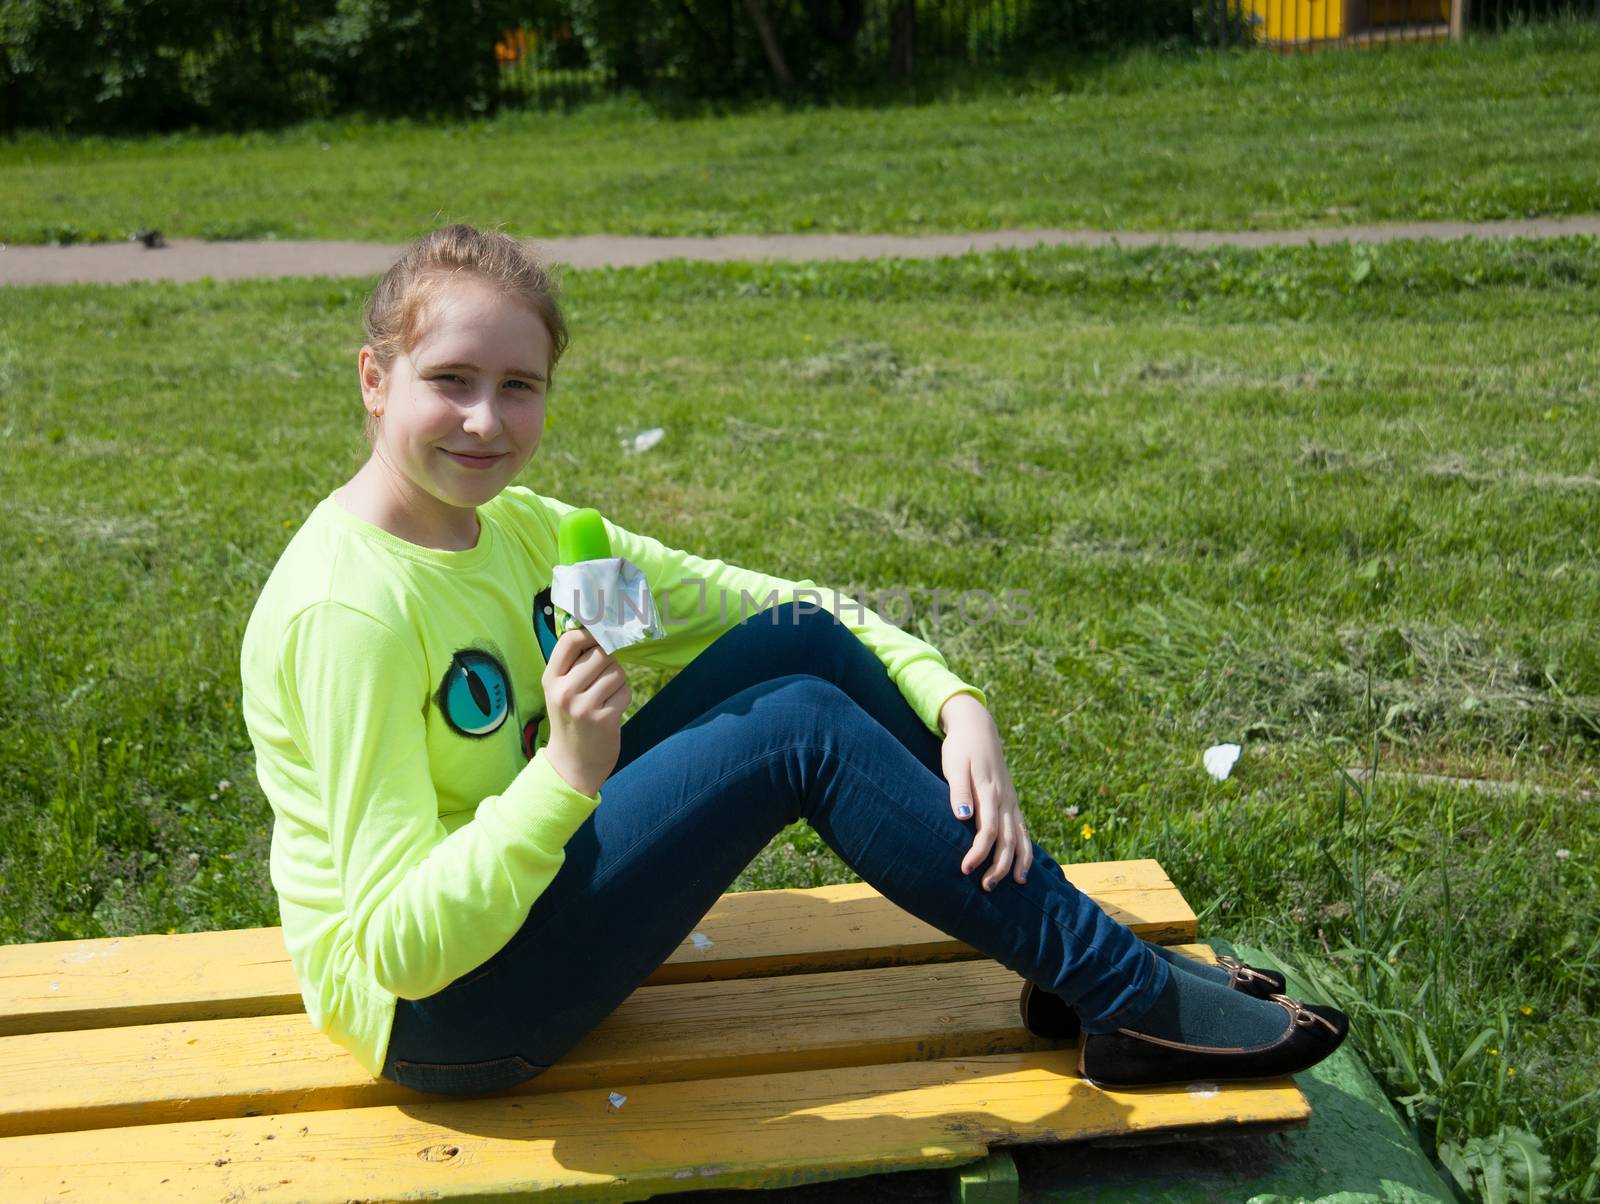 joyful girl eating ice cream in the summer in the Park